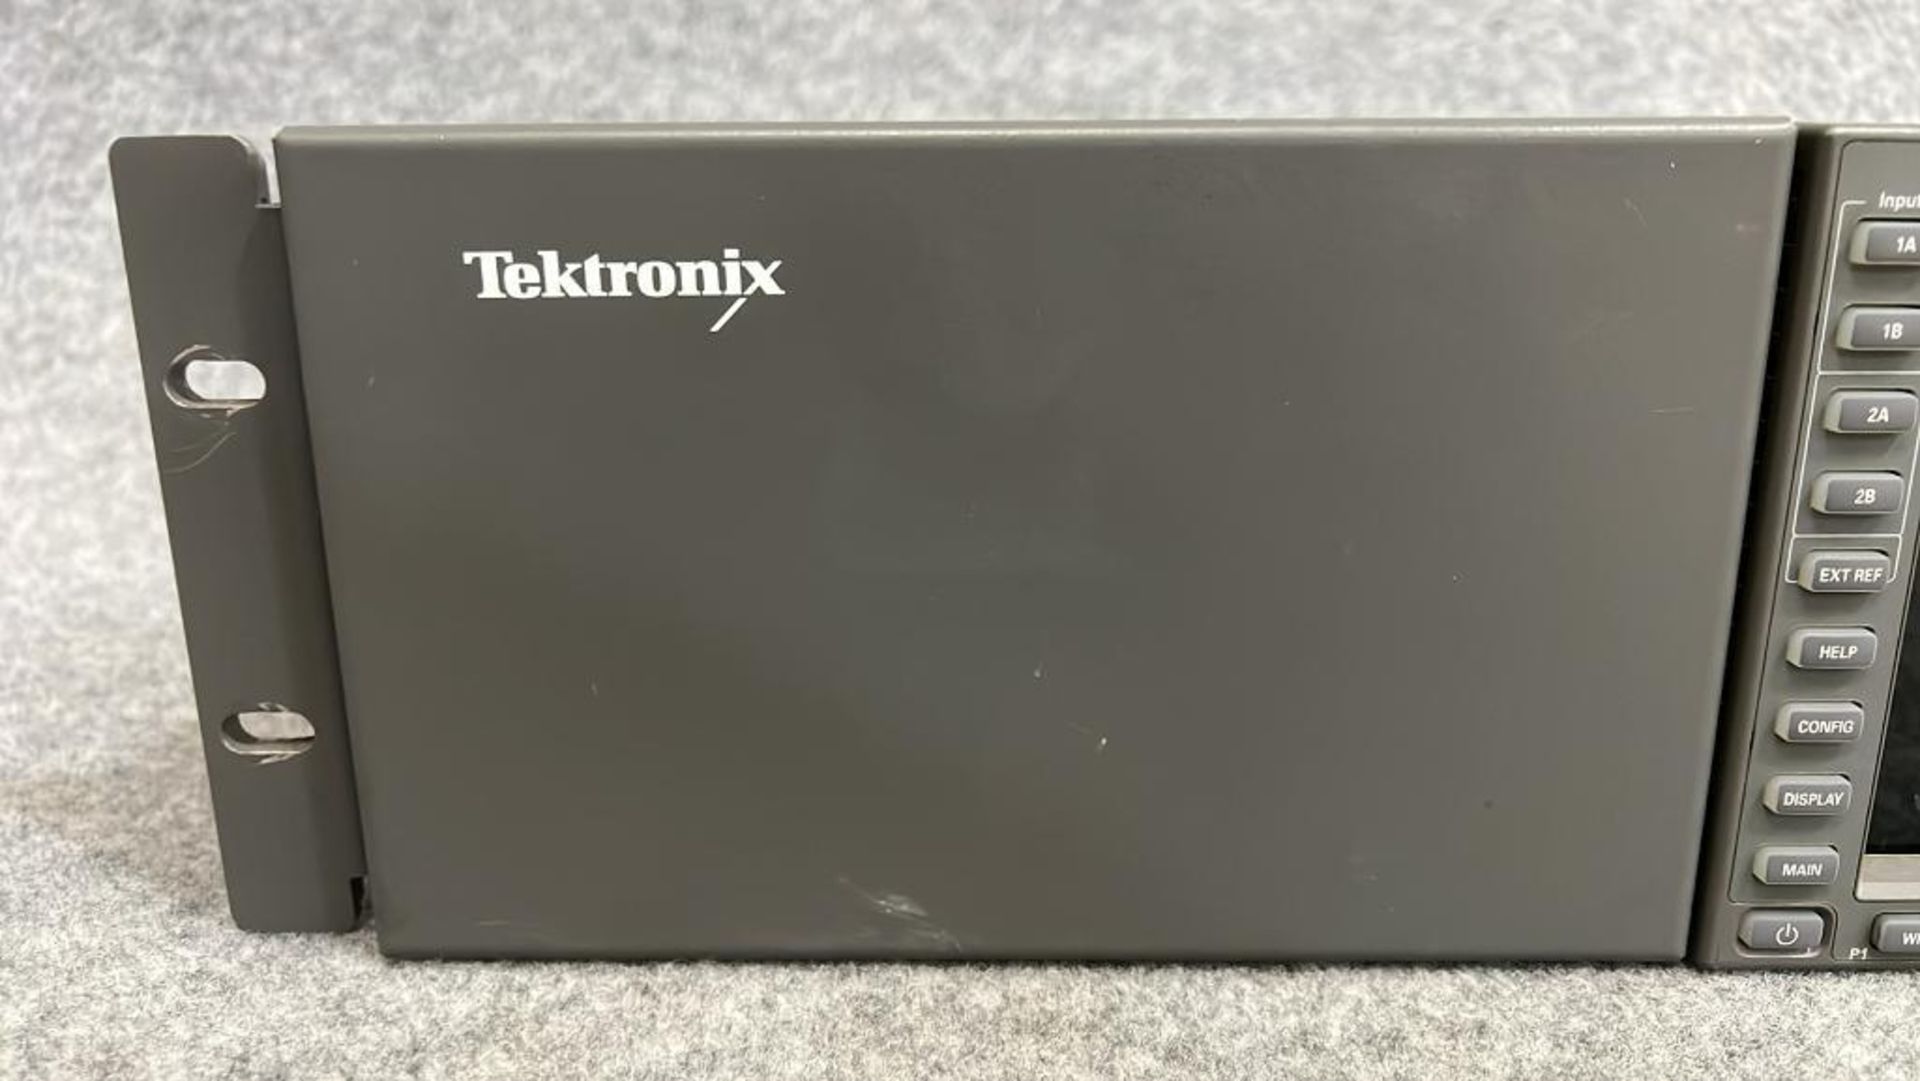 Tektronix WFM 5200, with Pu. Model: TektronixVFM 5200 - Image 2 of 7